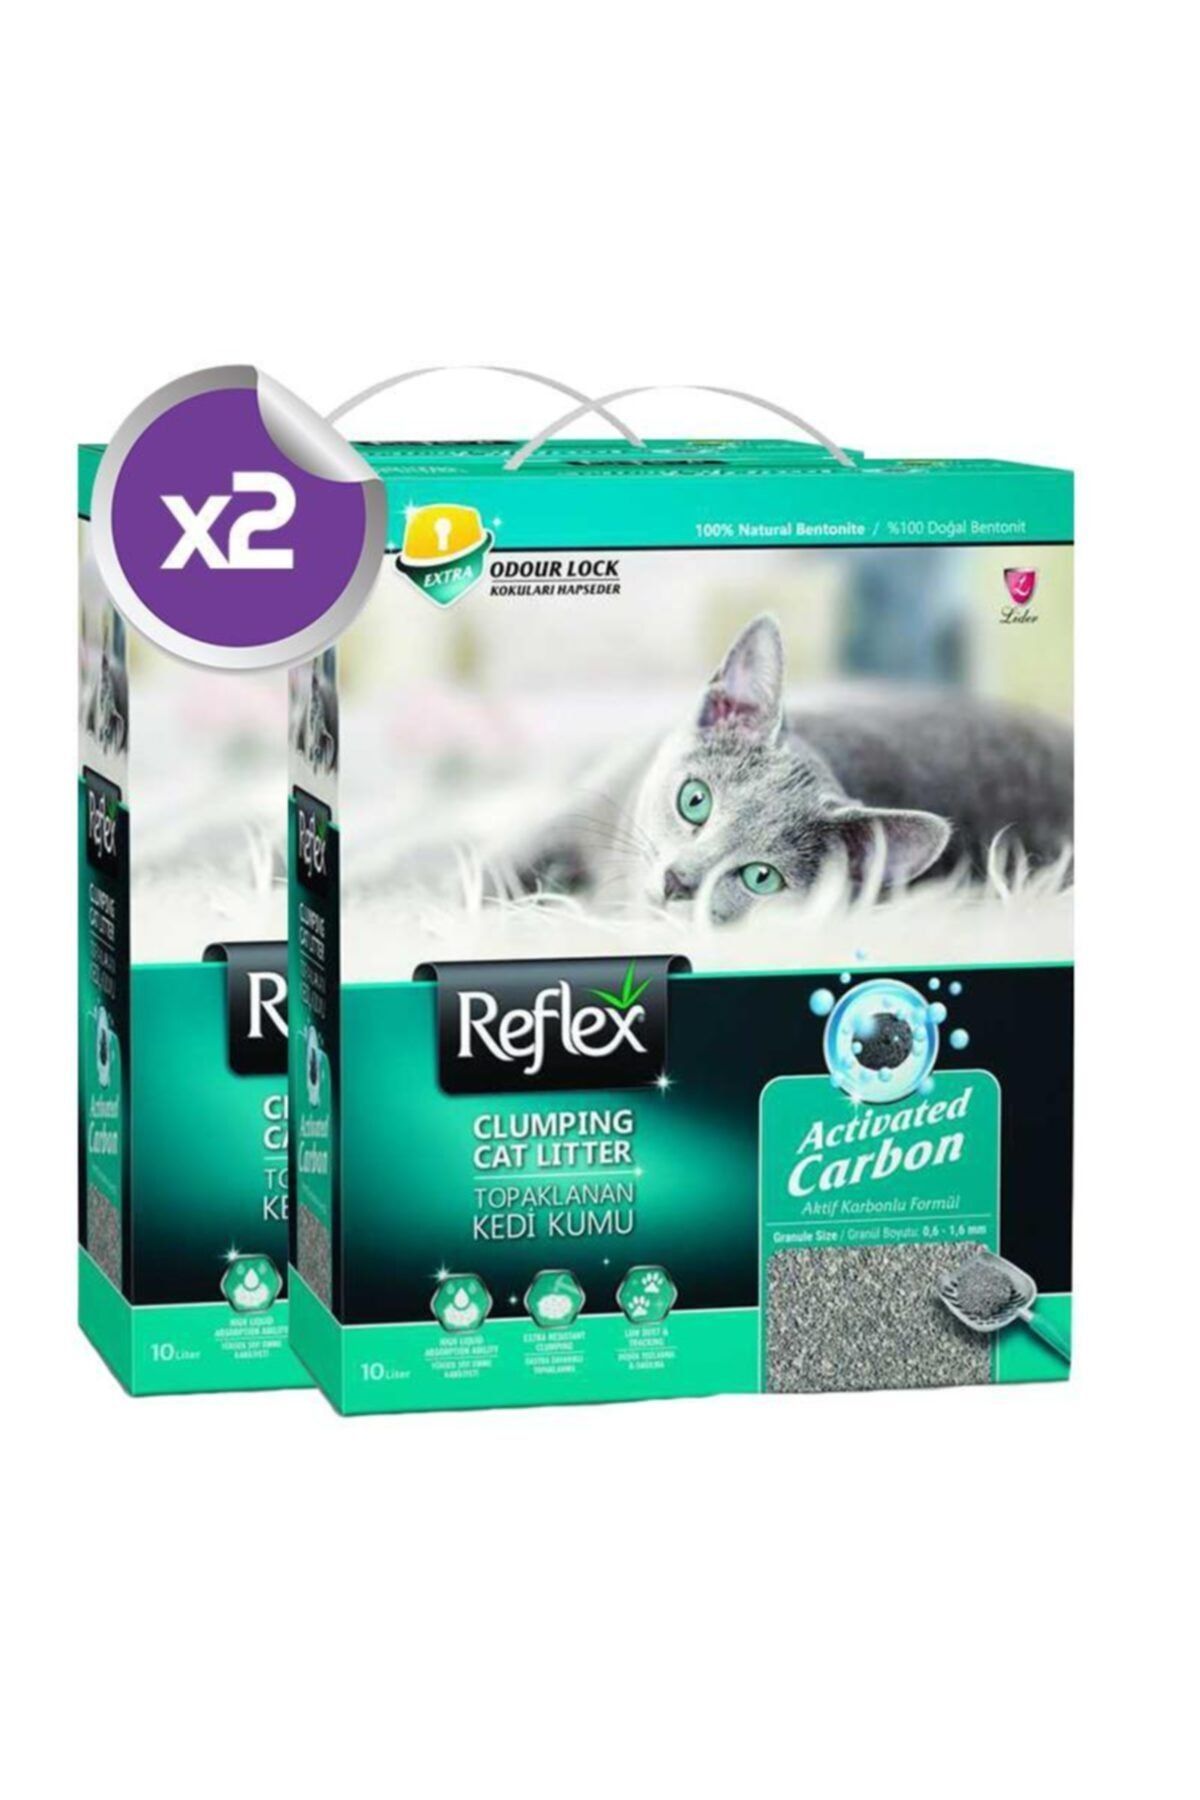 Reflex Aktif Karbonlu Süper Hızlı Topaklanan Kedi Kumu 10 Lt